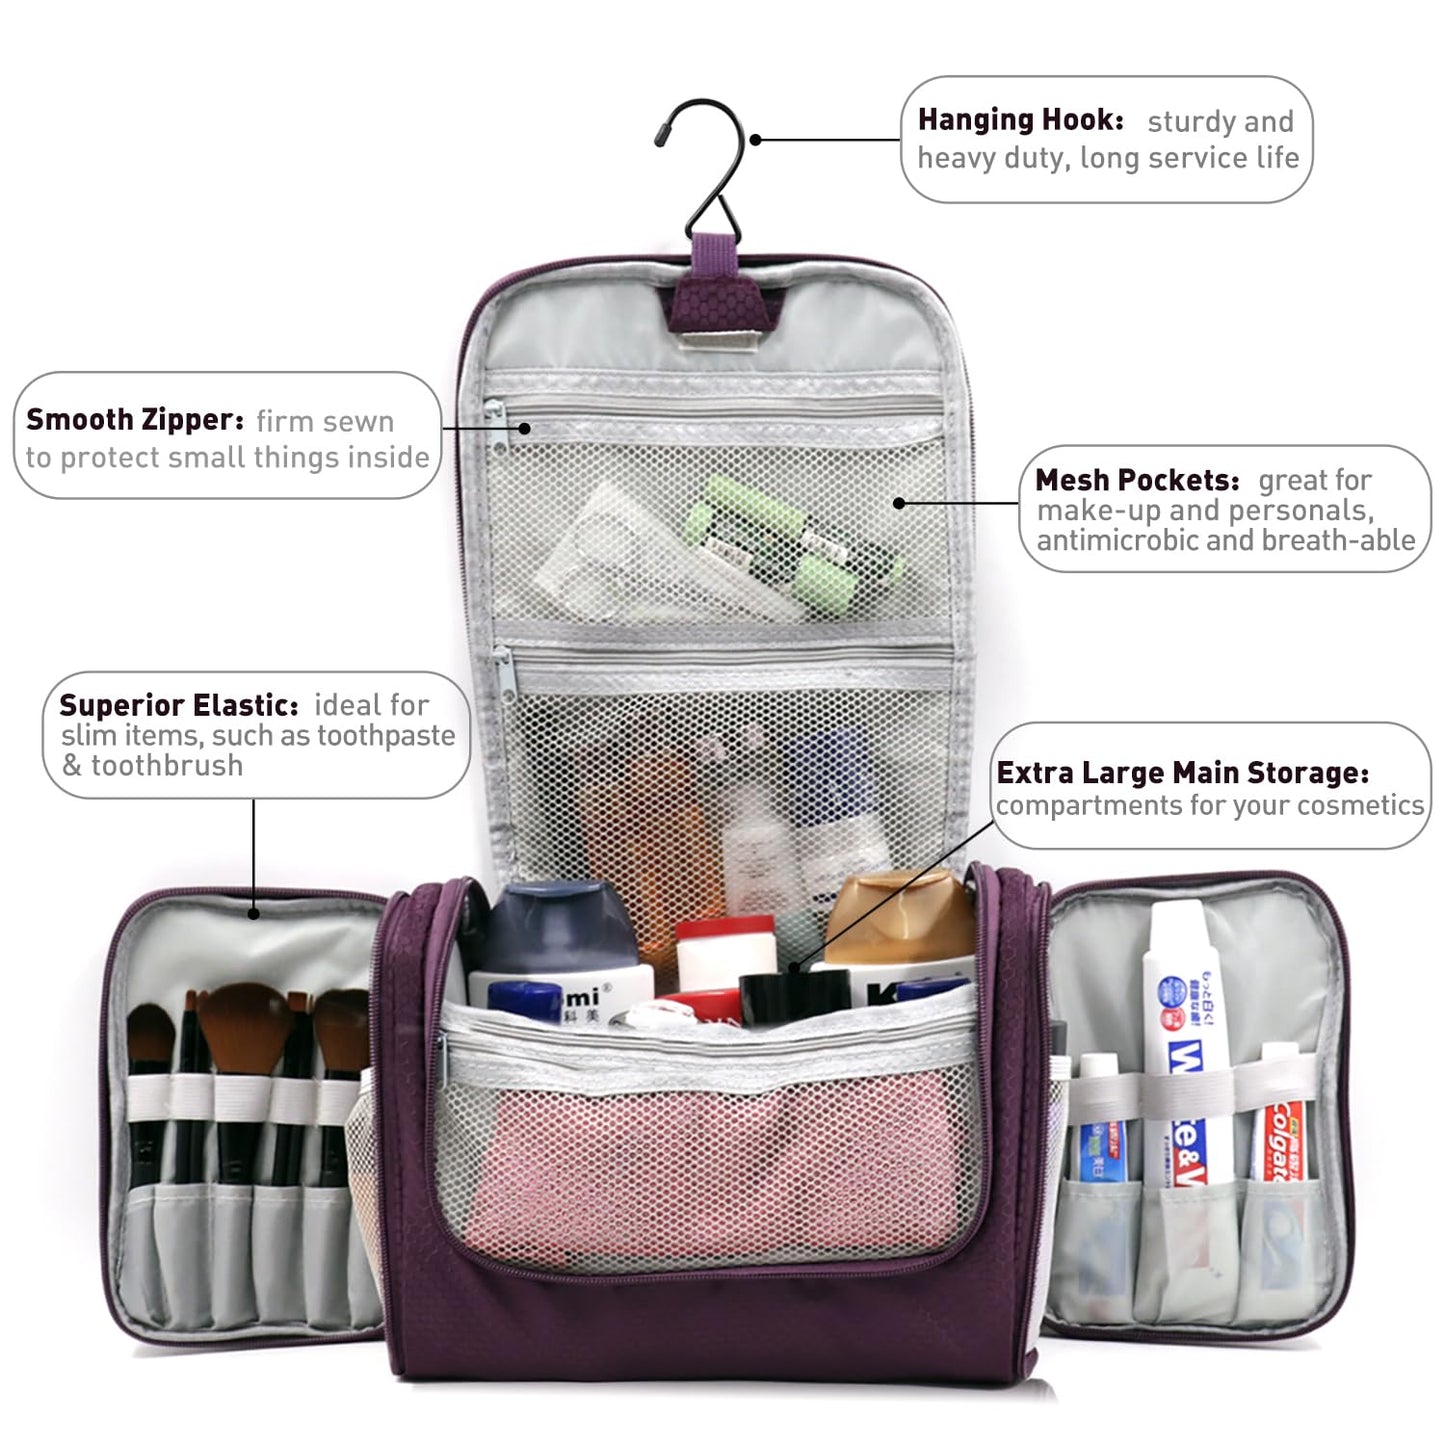 Buruis Large Capacity Toiletry Bag for Women and Men, Hanging Toiletry Organizer Cosmetics Makeup Bag, Water-resistant Dopp kit Shaving Bag for Full Sized Toiletries, Travel Essentials (Purple)